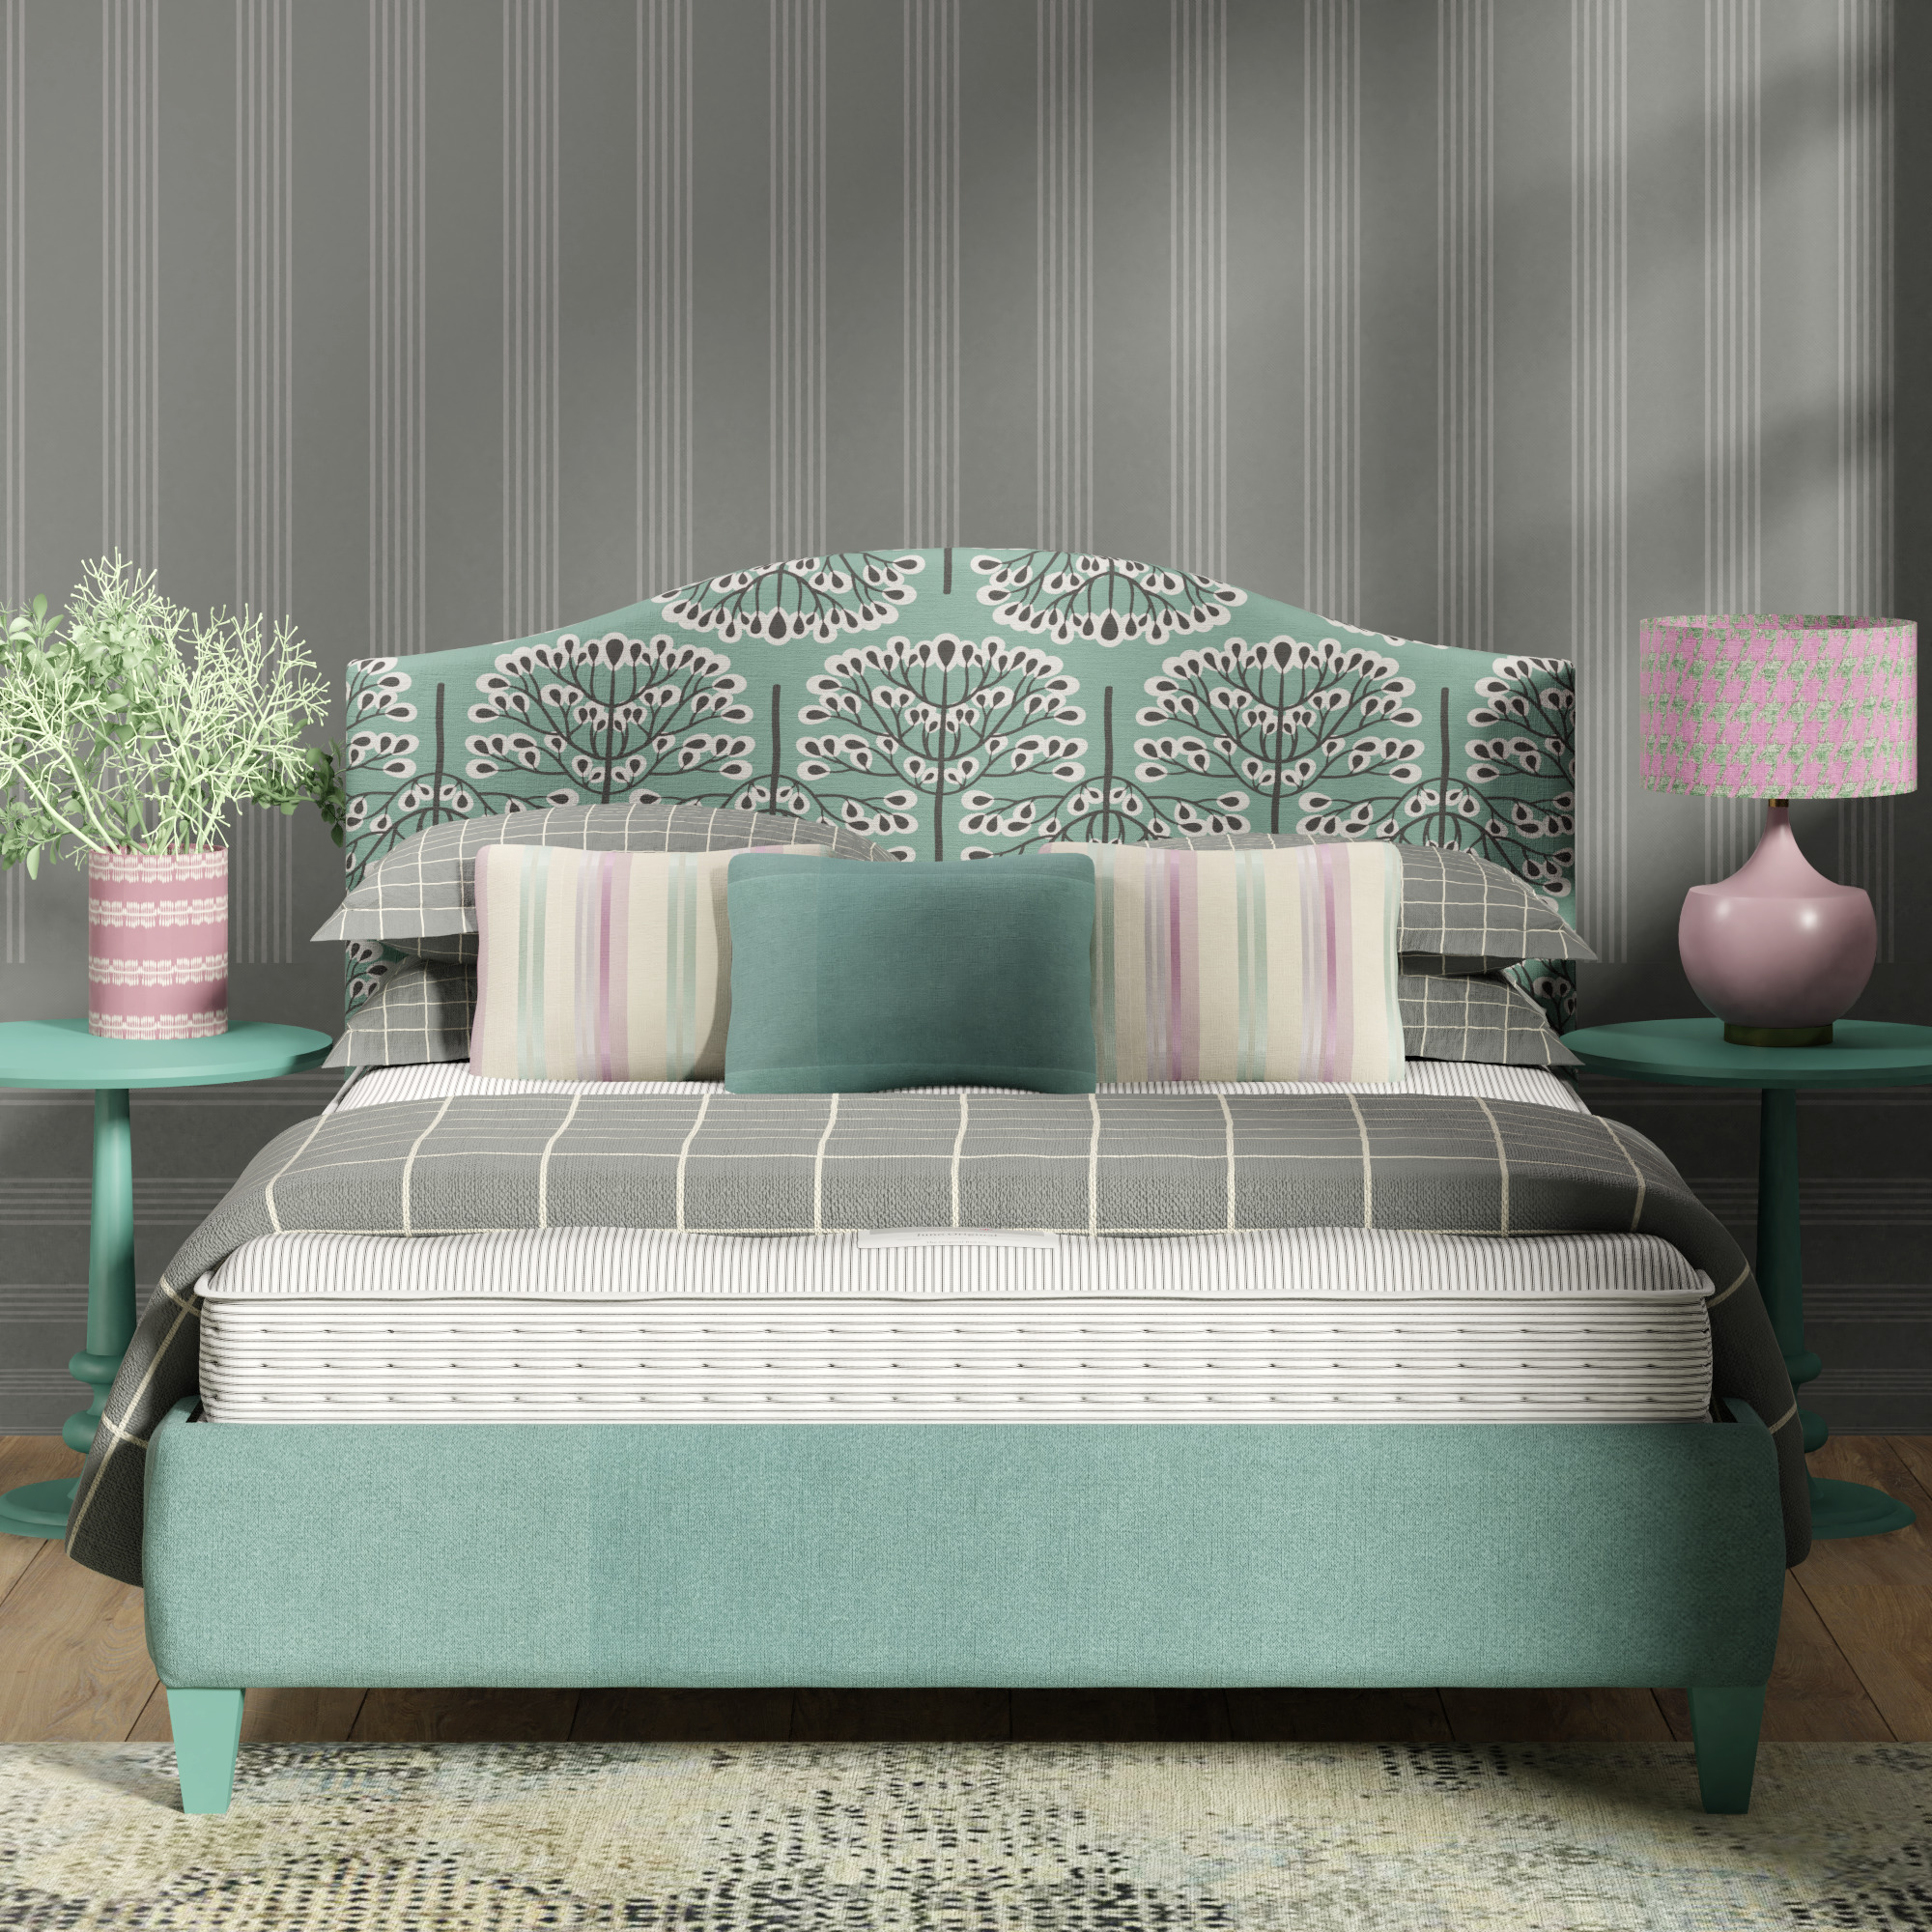 Daniella upholstered bed - Image green grey